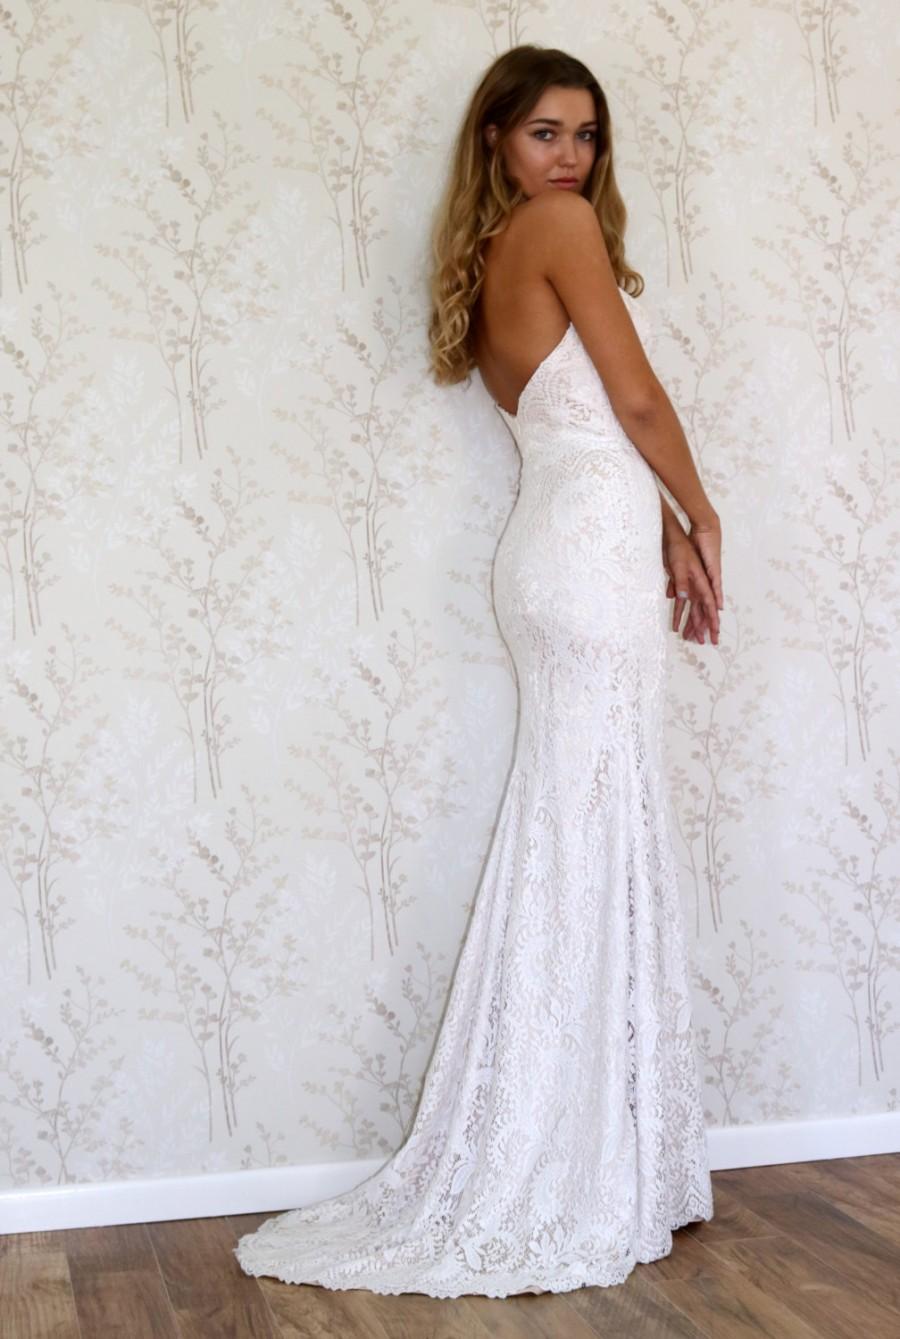 Hochzeit - Lace Wedding dress/Simple bohemian style wedding gown/Strapless sweetheart neckline wedding dress.